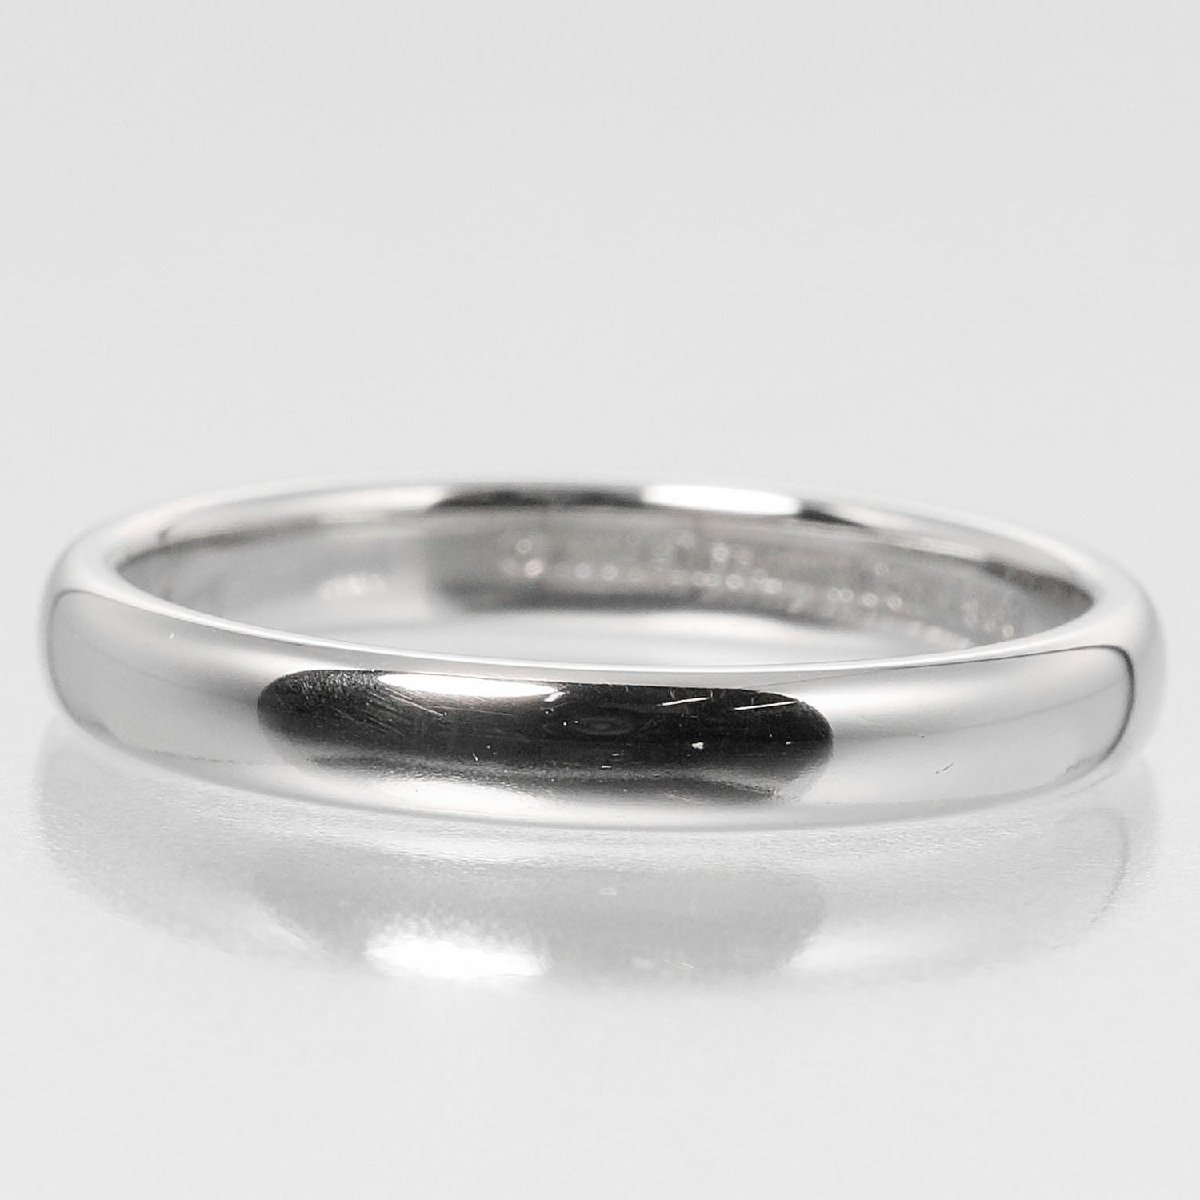  Tiffany four ever свадьба кольцо кольцо 13.5 номер Classic частота 3mm модель 4.82g Pt950 платина [I182323010] б/у 